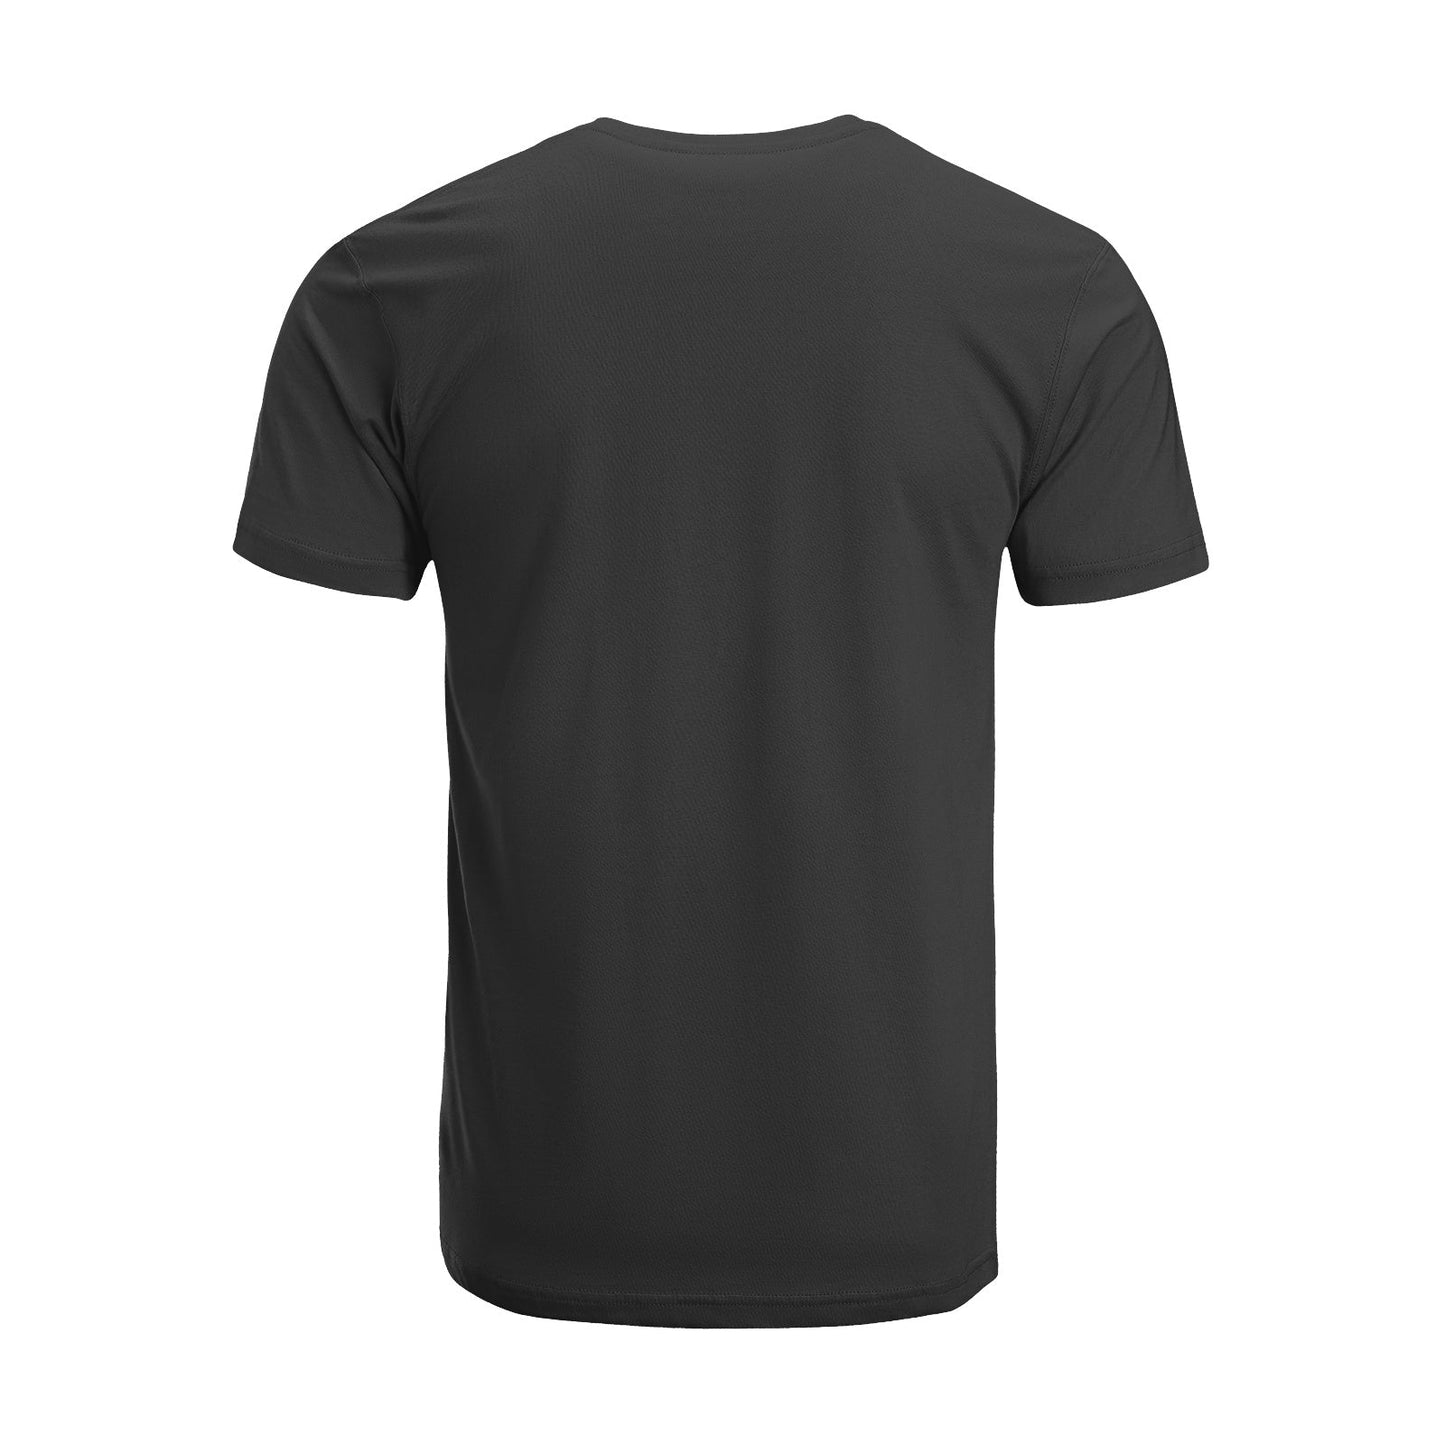 Unisex Short Sleeve Crew Neck Cotton Jersey T-Shirt MOM 26